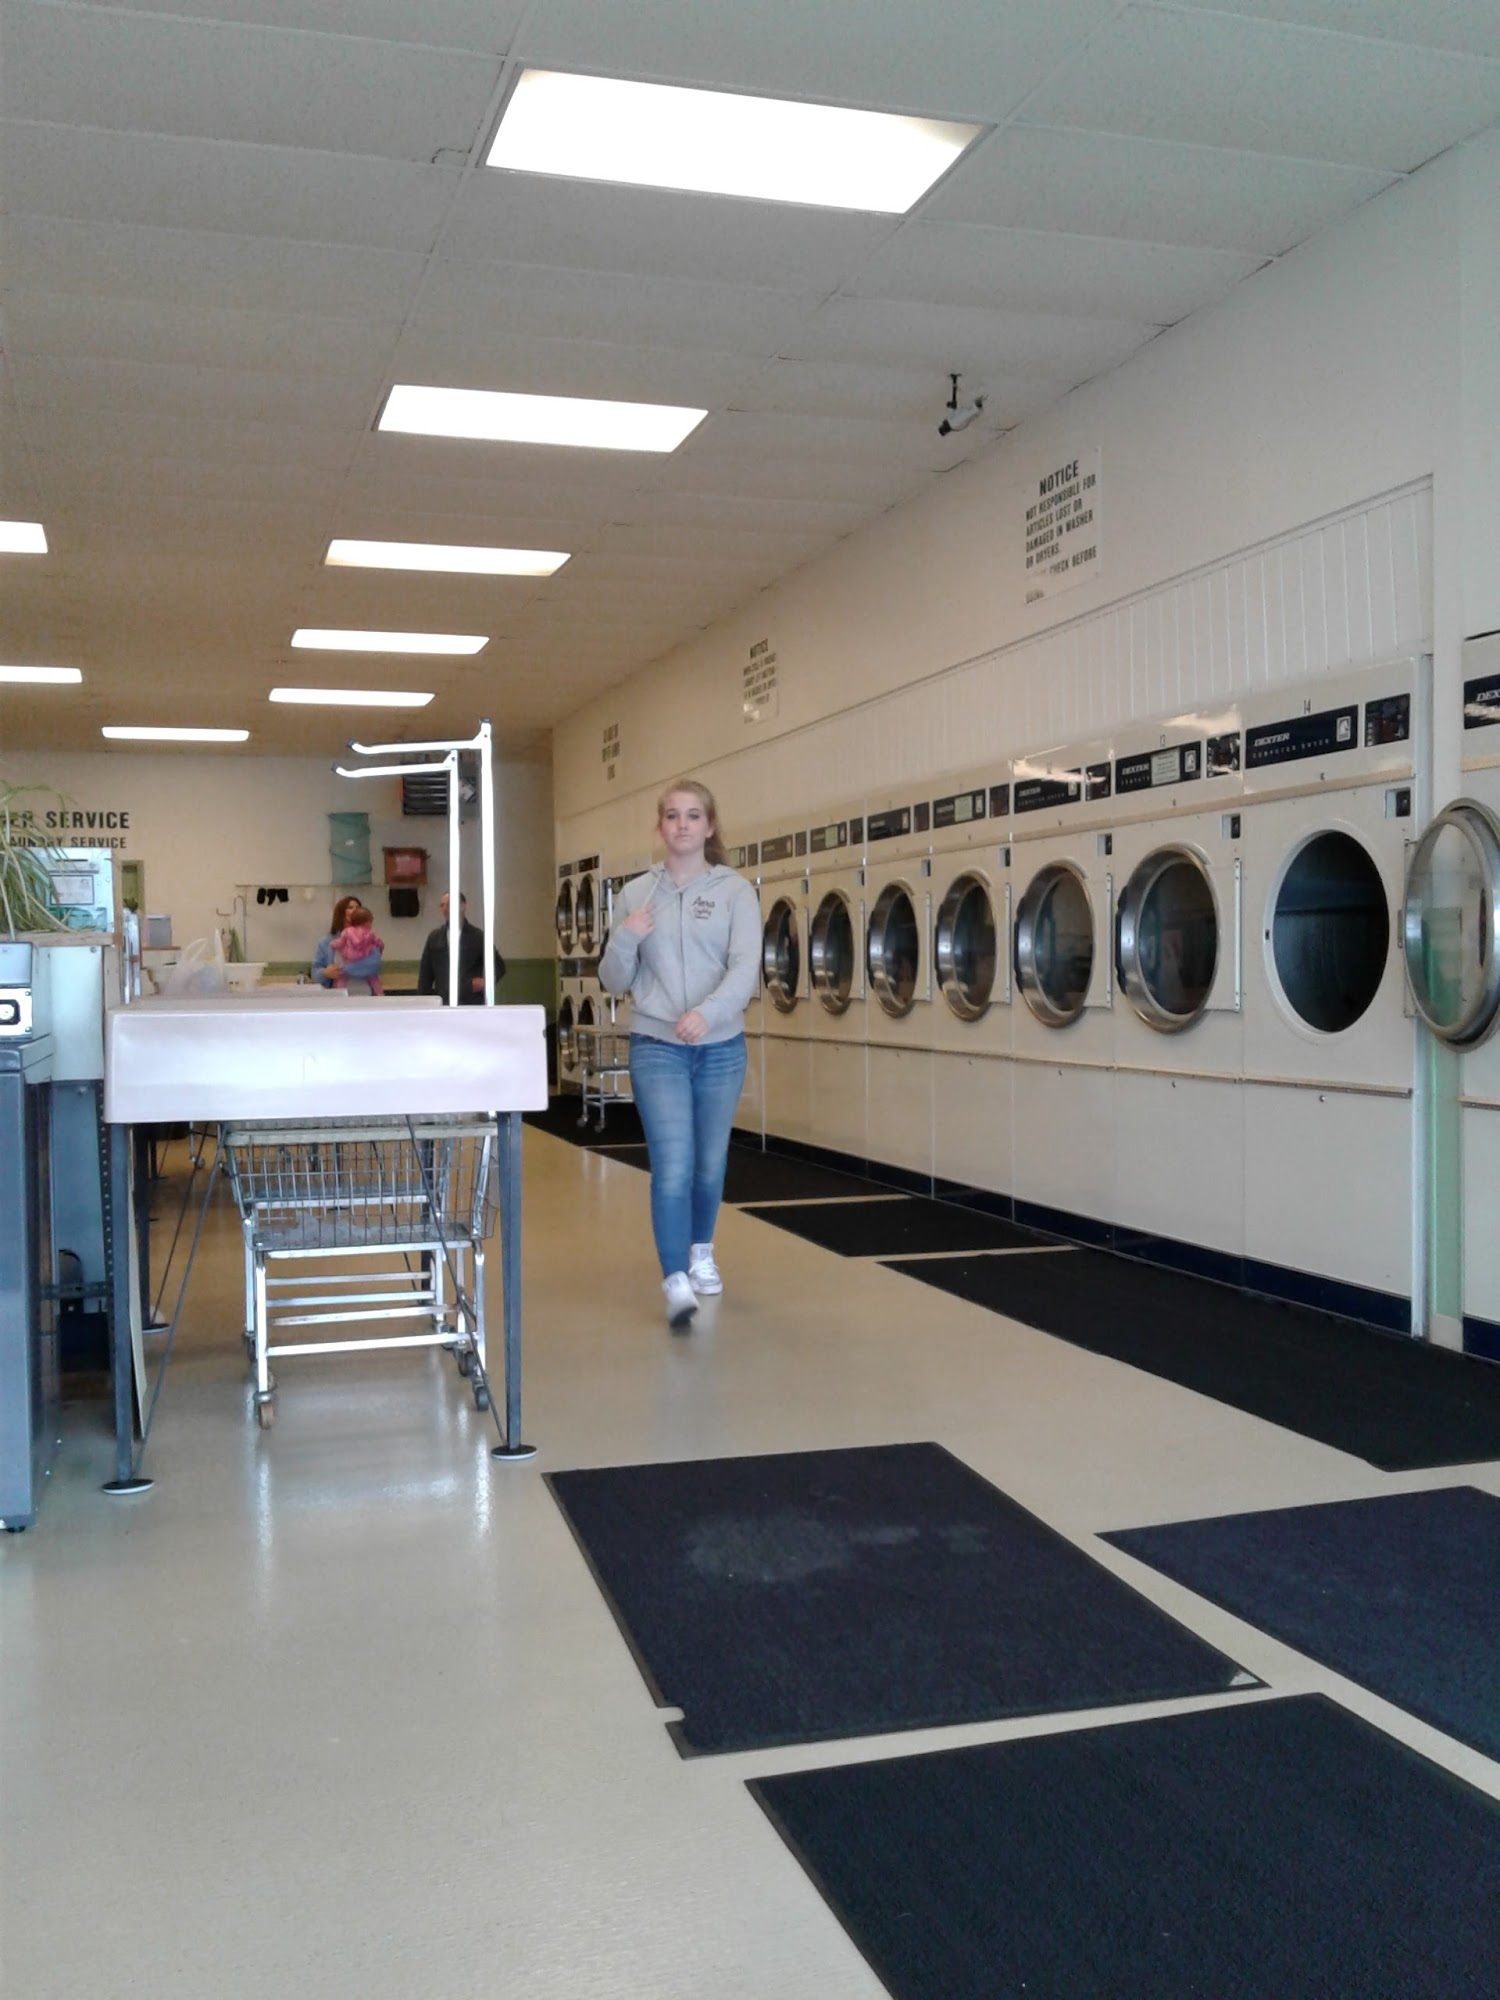 Laundry 30600 Drouillard Rd # E, Walbridge Ohio 43465